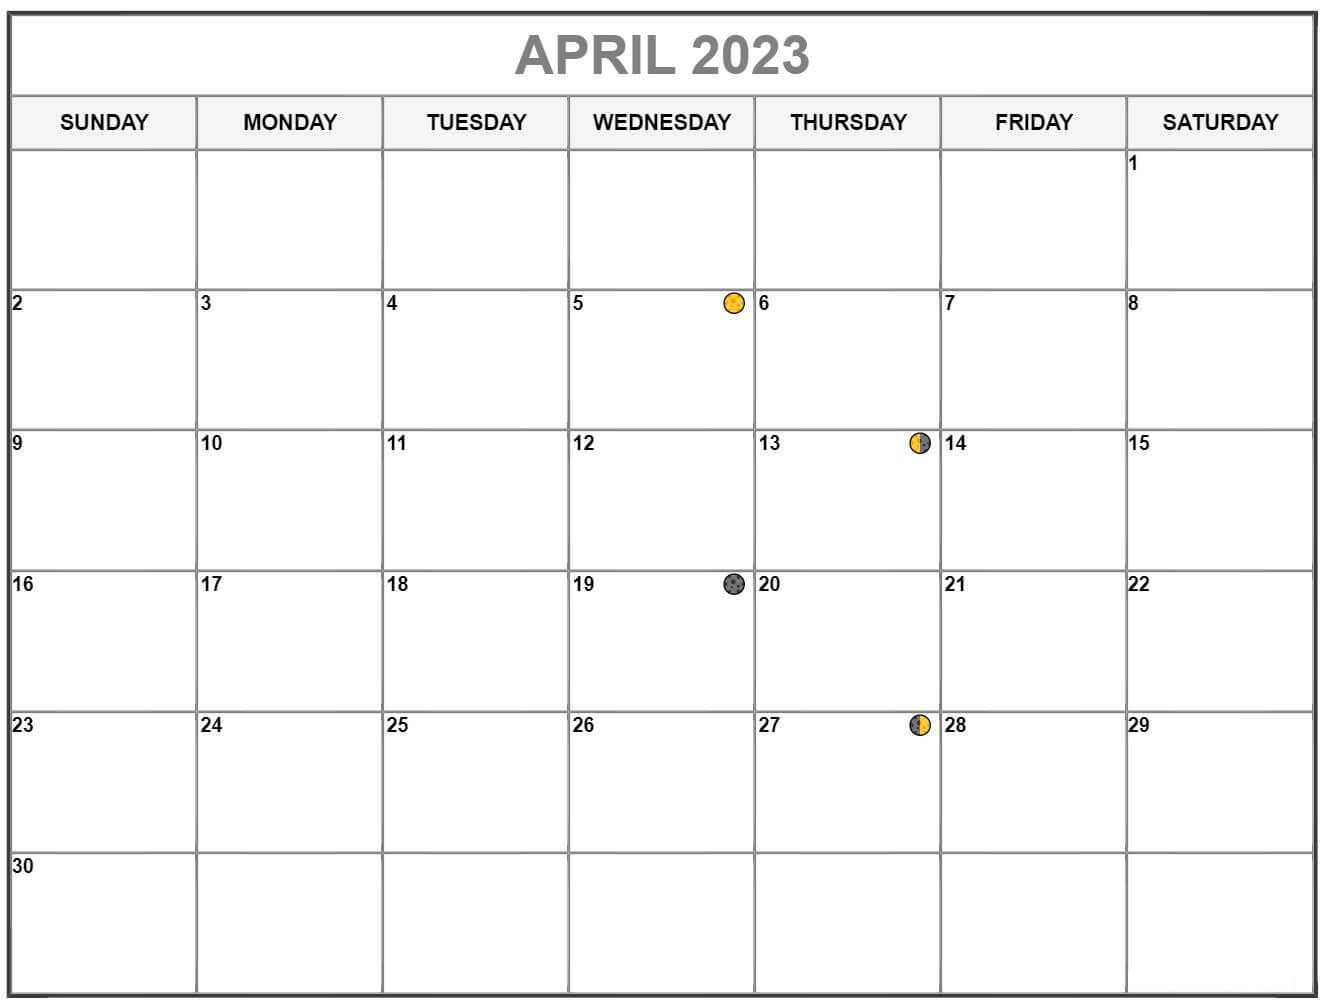 April 2023 Lunar Calendar